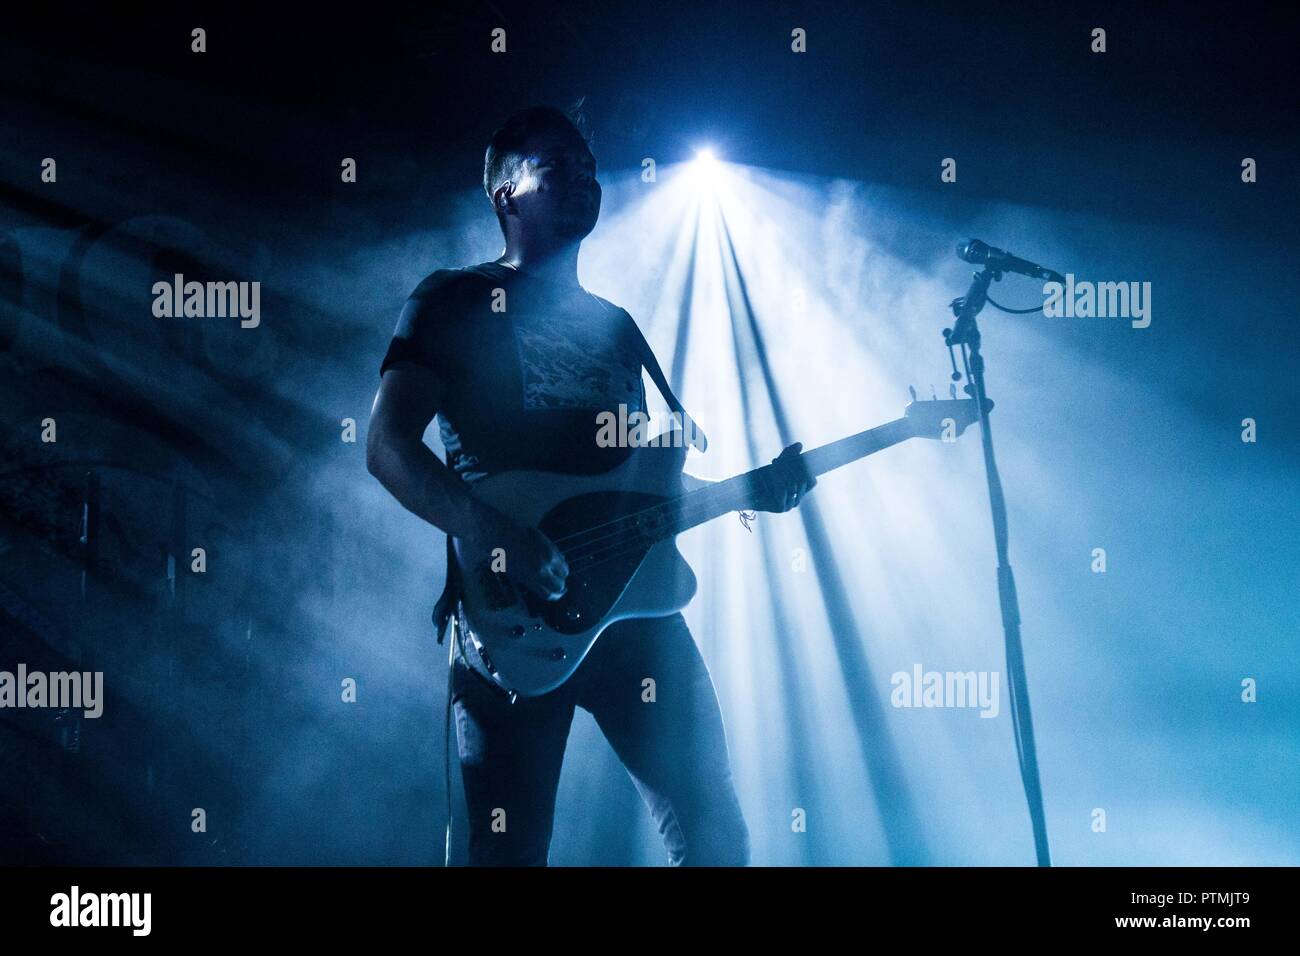 Milan Italy 9 October 2018 The Rasmus  live at Alcatraz © Roberto Finizio / Alamy Live News Stock Photo